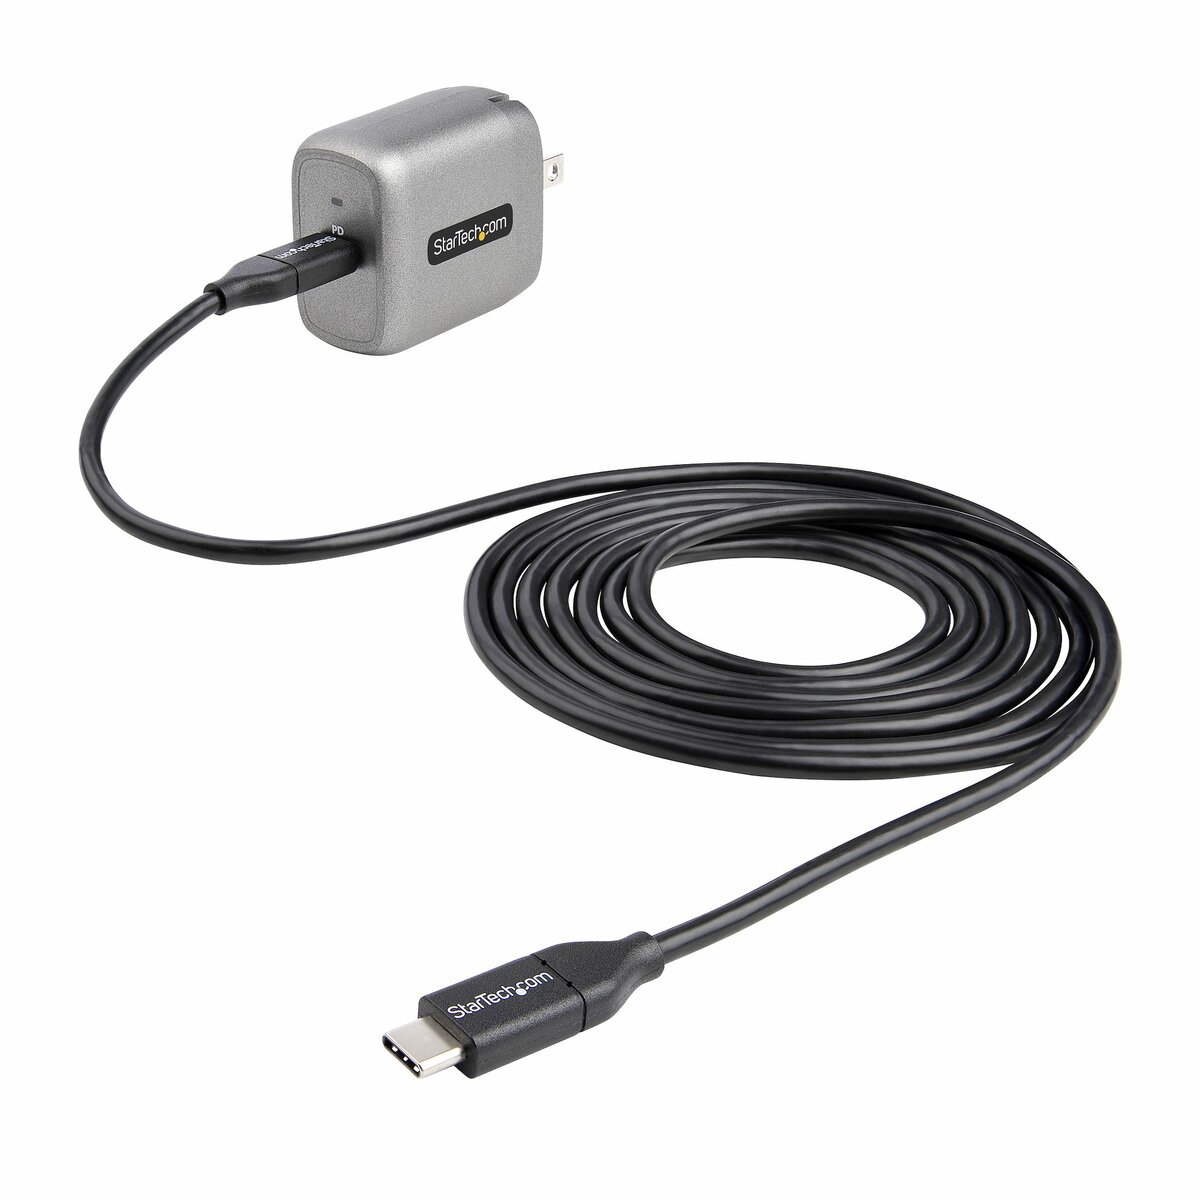 Tripp Lite 60W COMPACT USB-C WALL CHARGER - GAN TECHNOLOGY, U